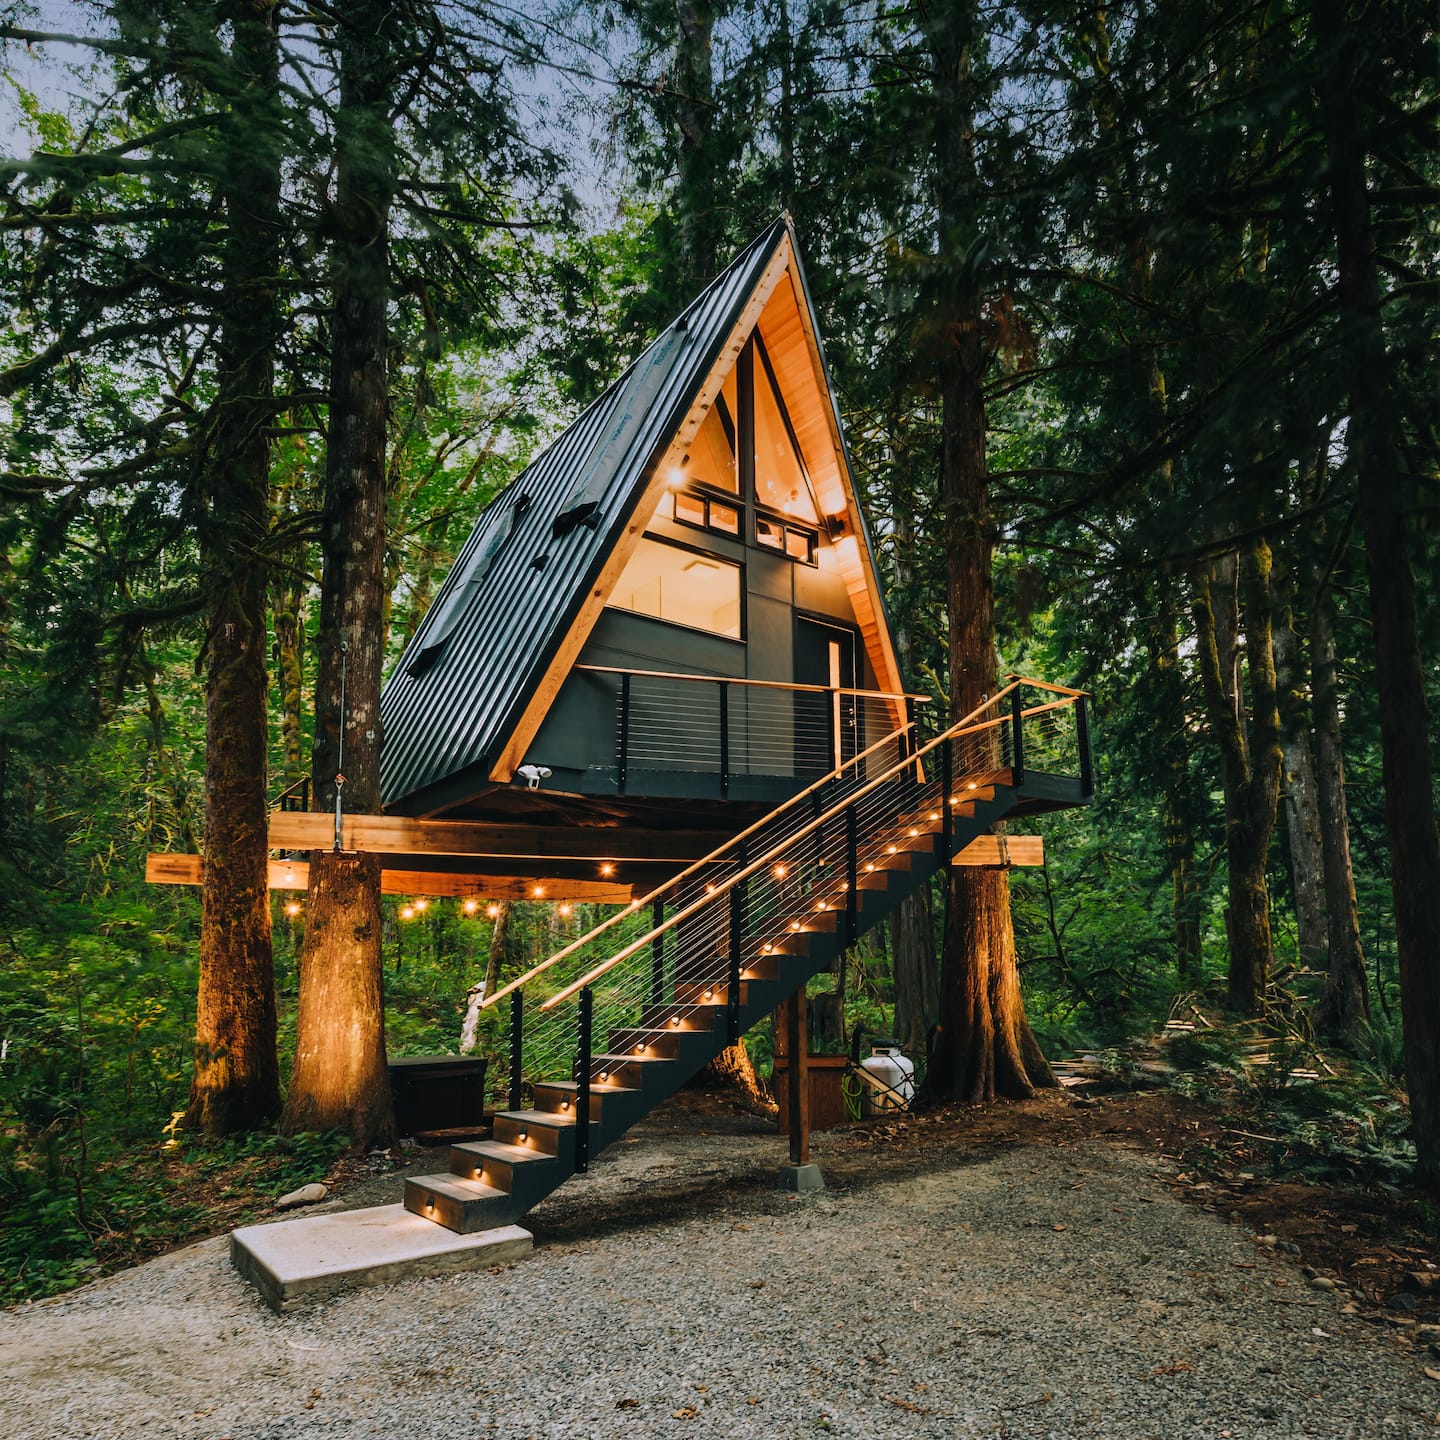 The Treeframe Cabin